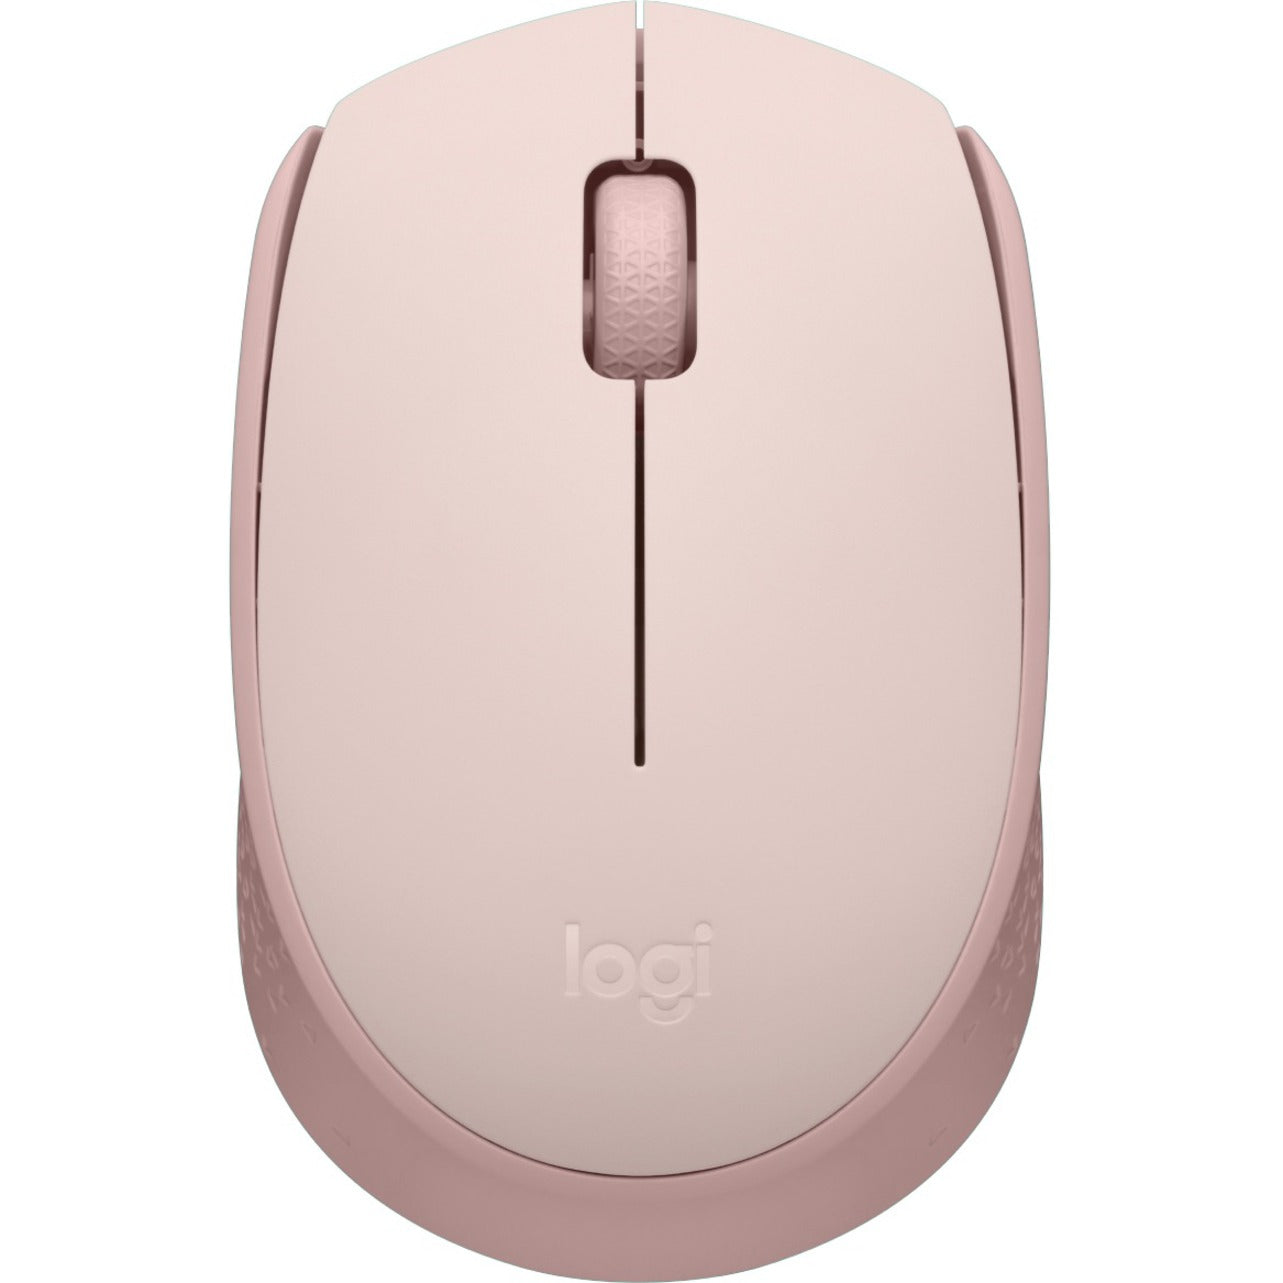 Logitech 910-006862 M170 Mouse, Wireless 2.4 GHz Radio Frequency, USB Receiver, 1 Year Warranty